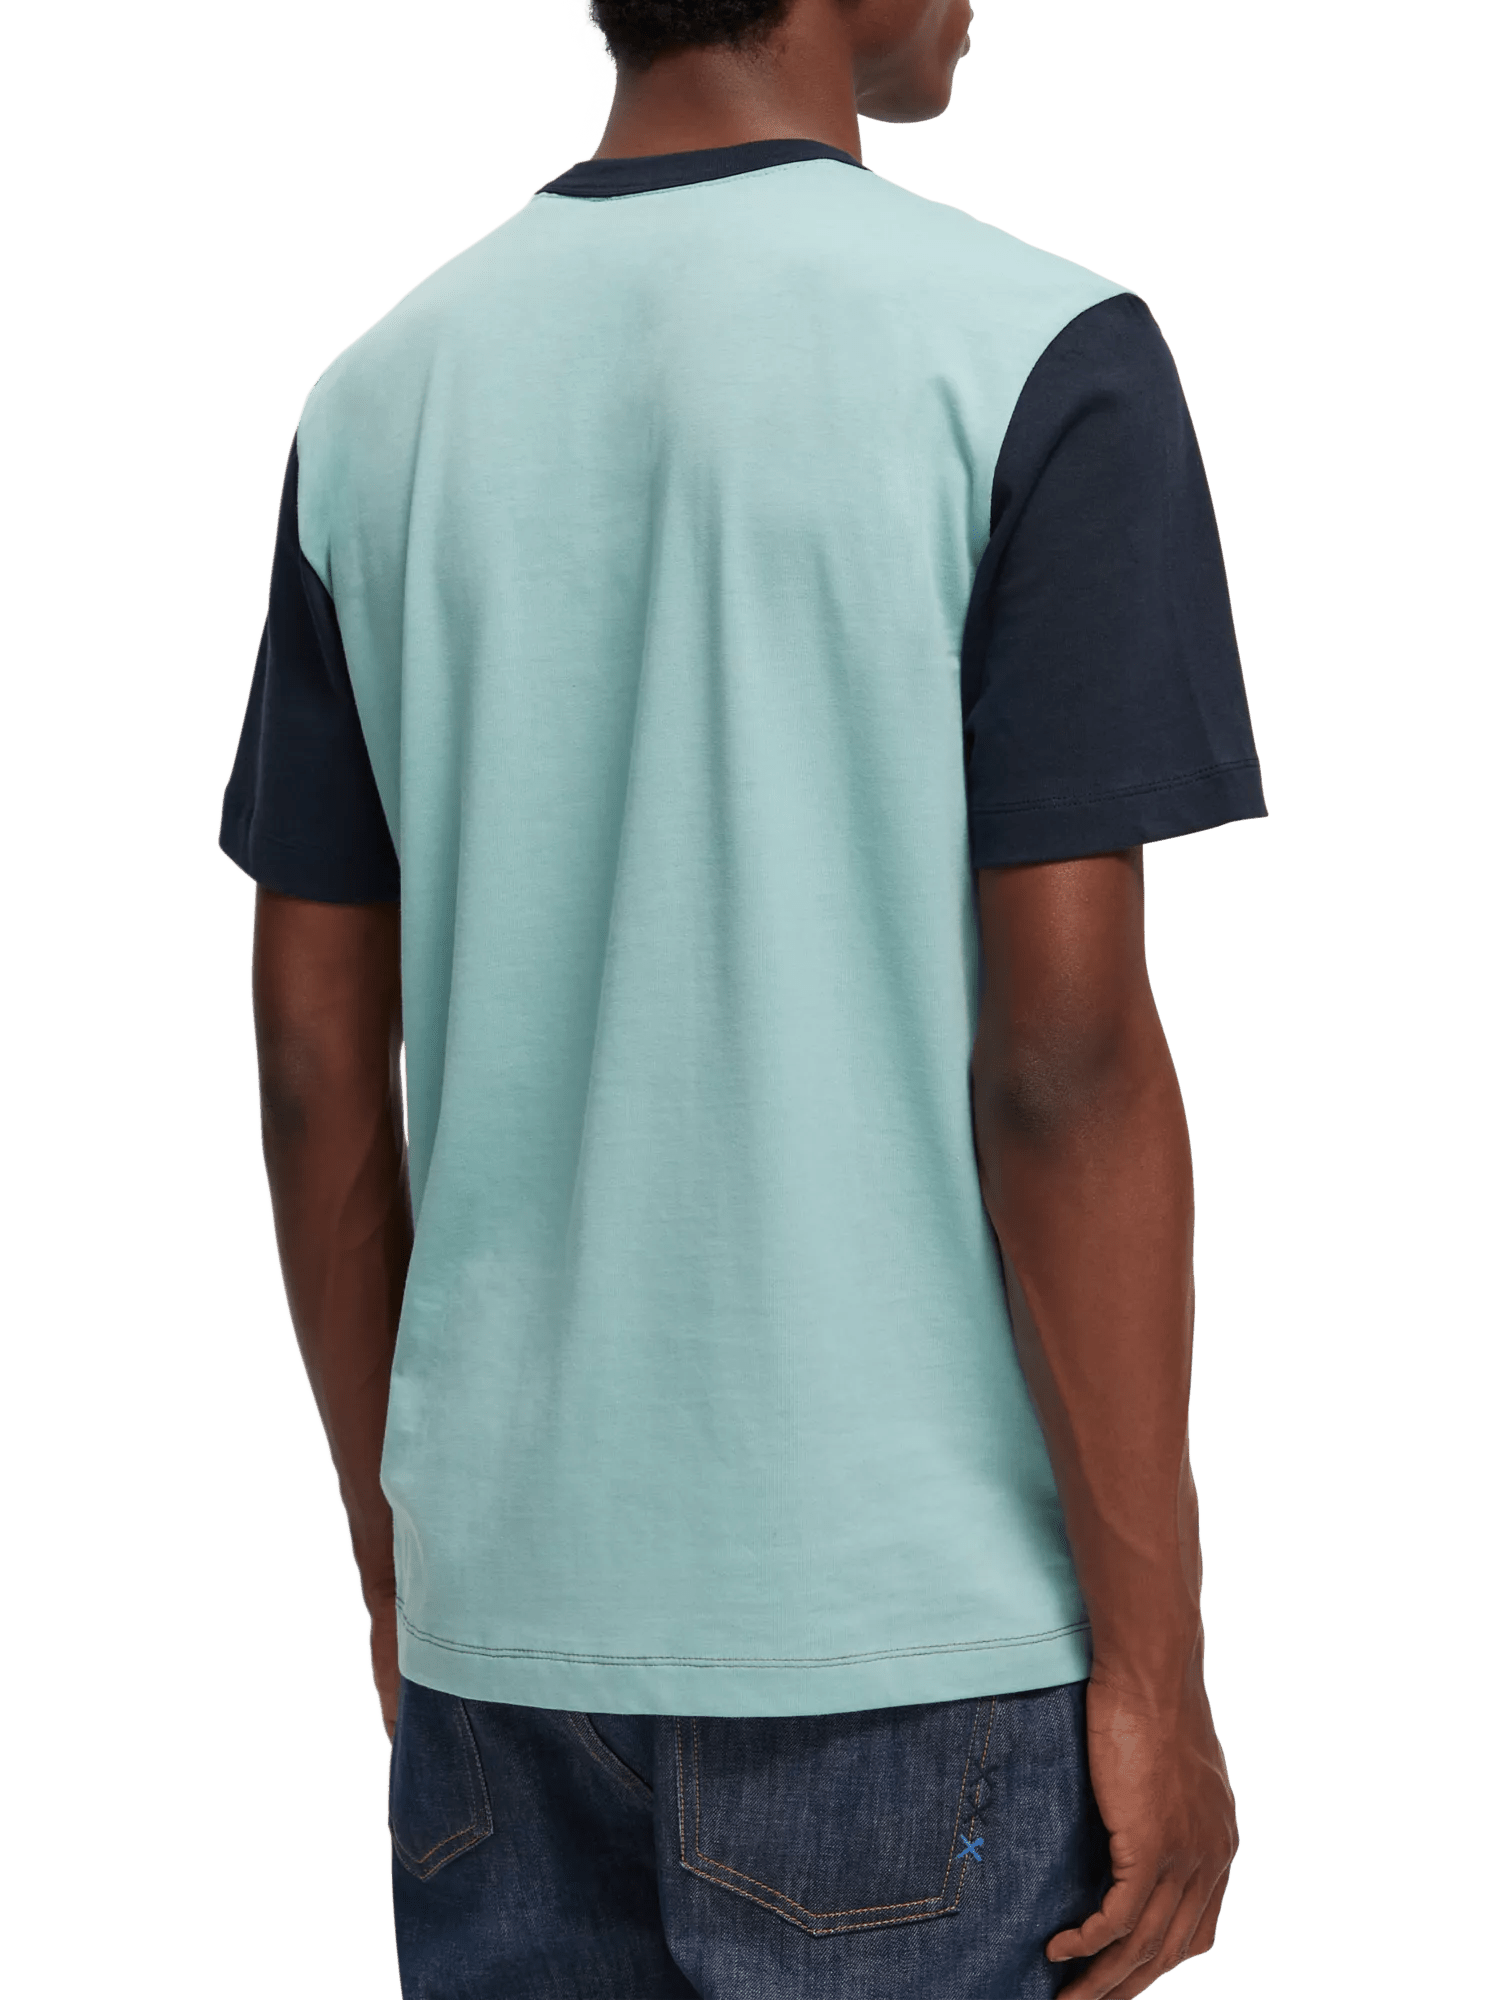 Scotch & Soda T-shirt color-block unisexe en coton bio NHD-BCK